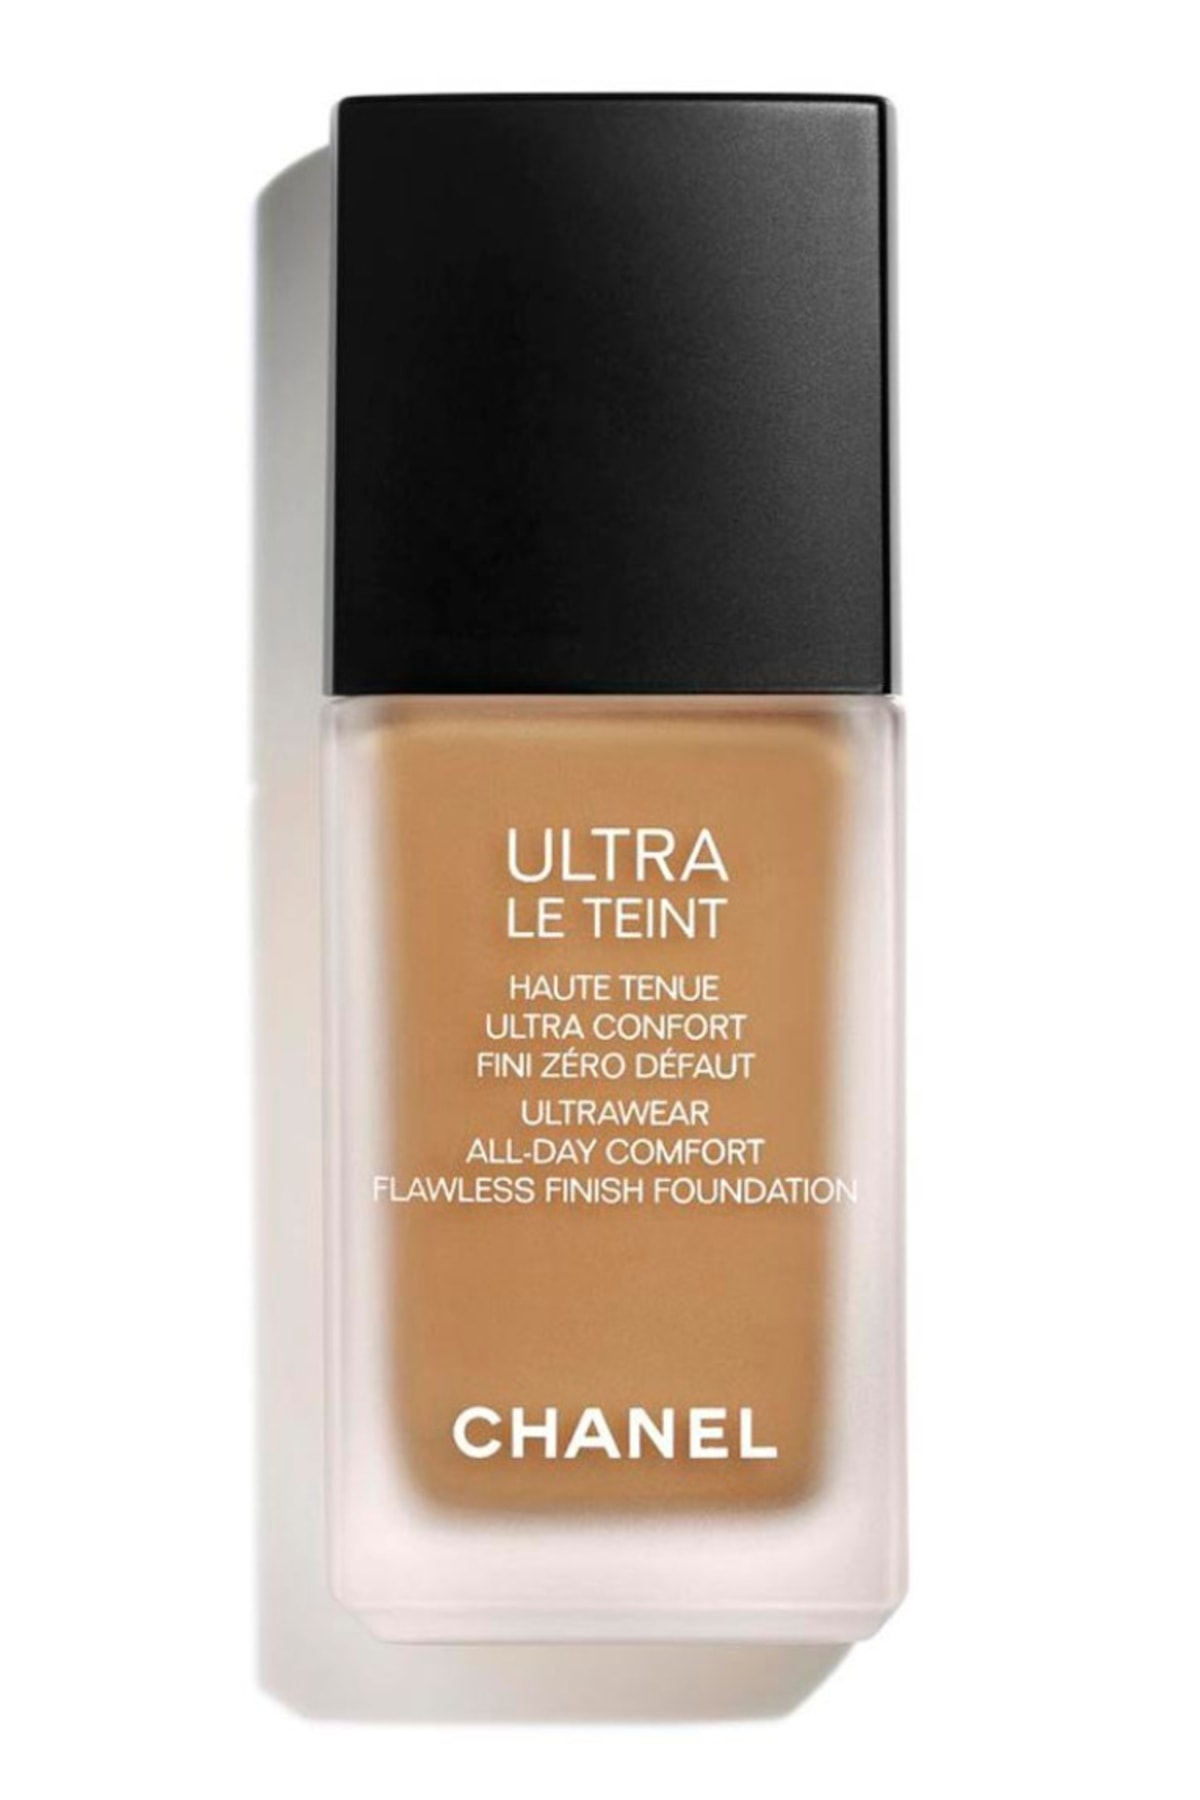 Chanel Ultra Le Teint Flawless Fınısh Foundatıon